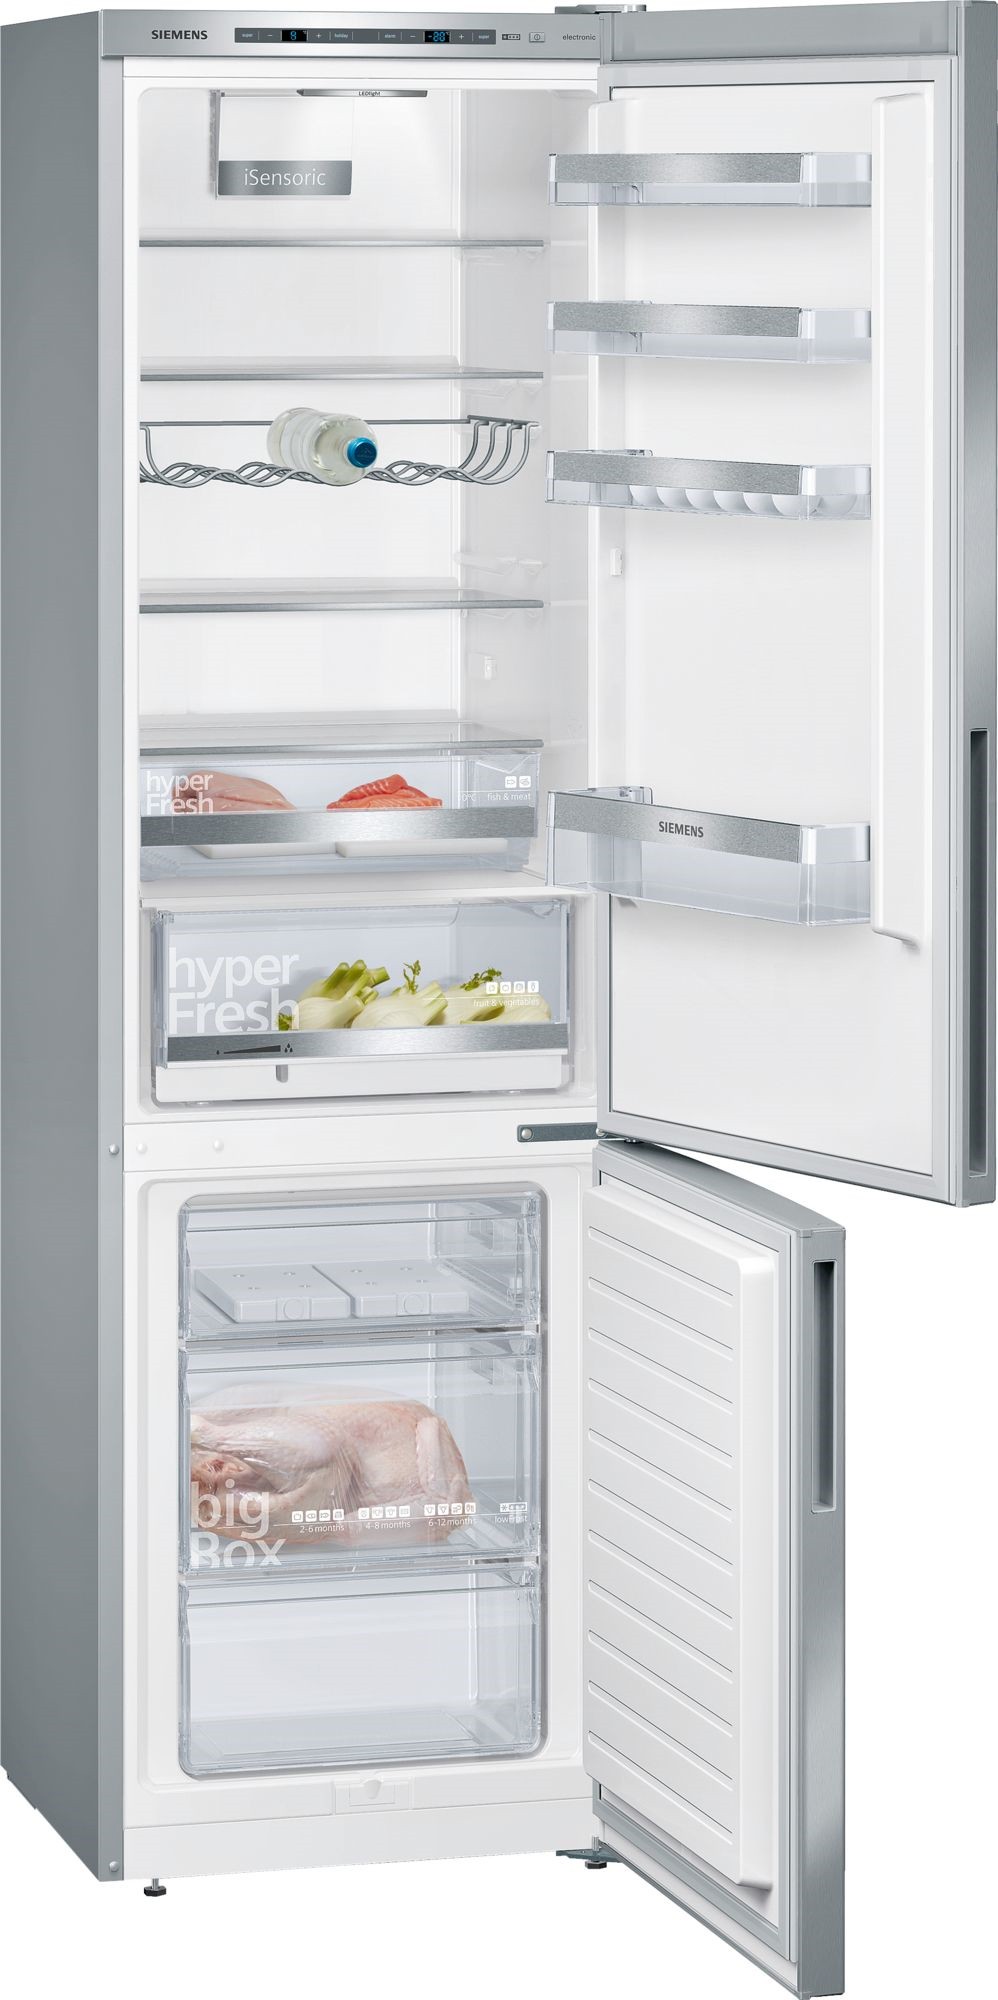 SIEMENS Réfrigérateur congélateur bas IQ500 HyperFresh 337L Inox - KG39EAICA